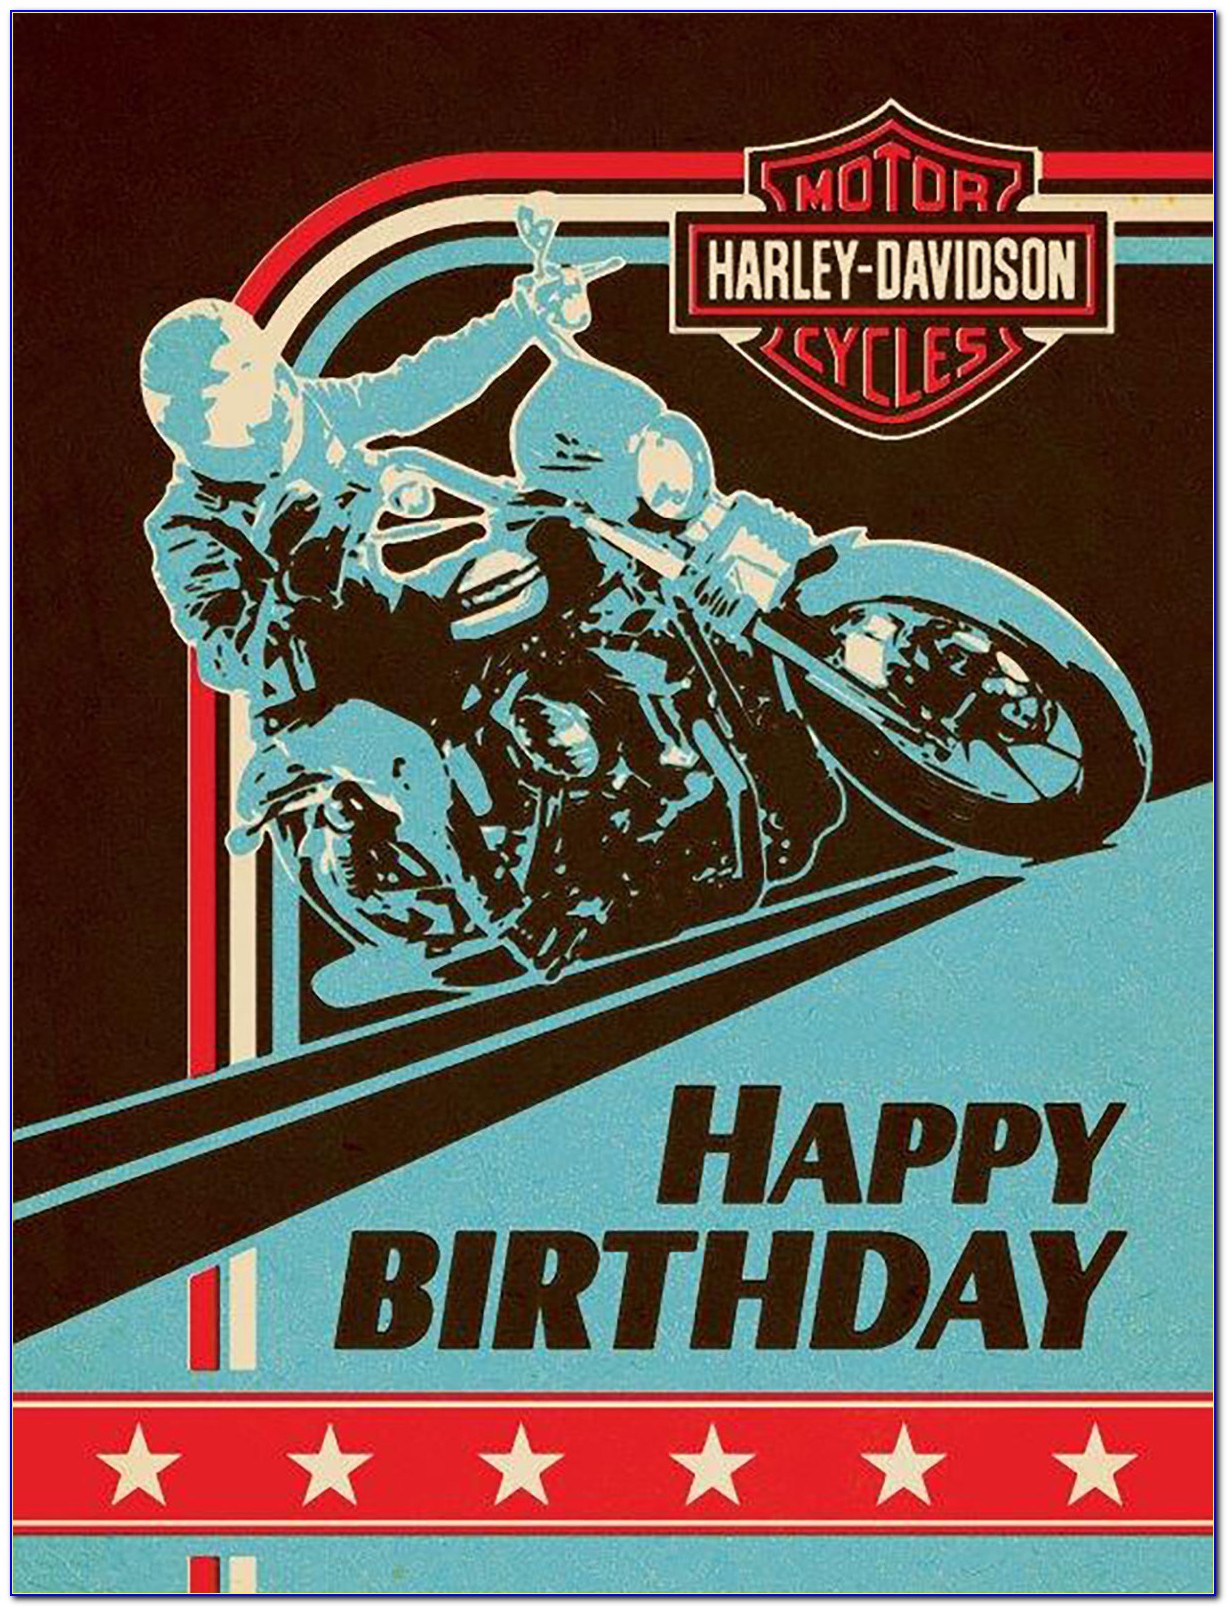 Harley Davidson Birthday Cards For Facebook